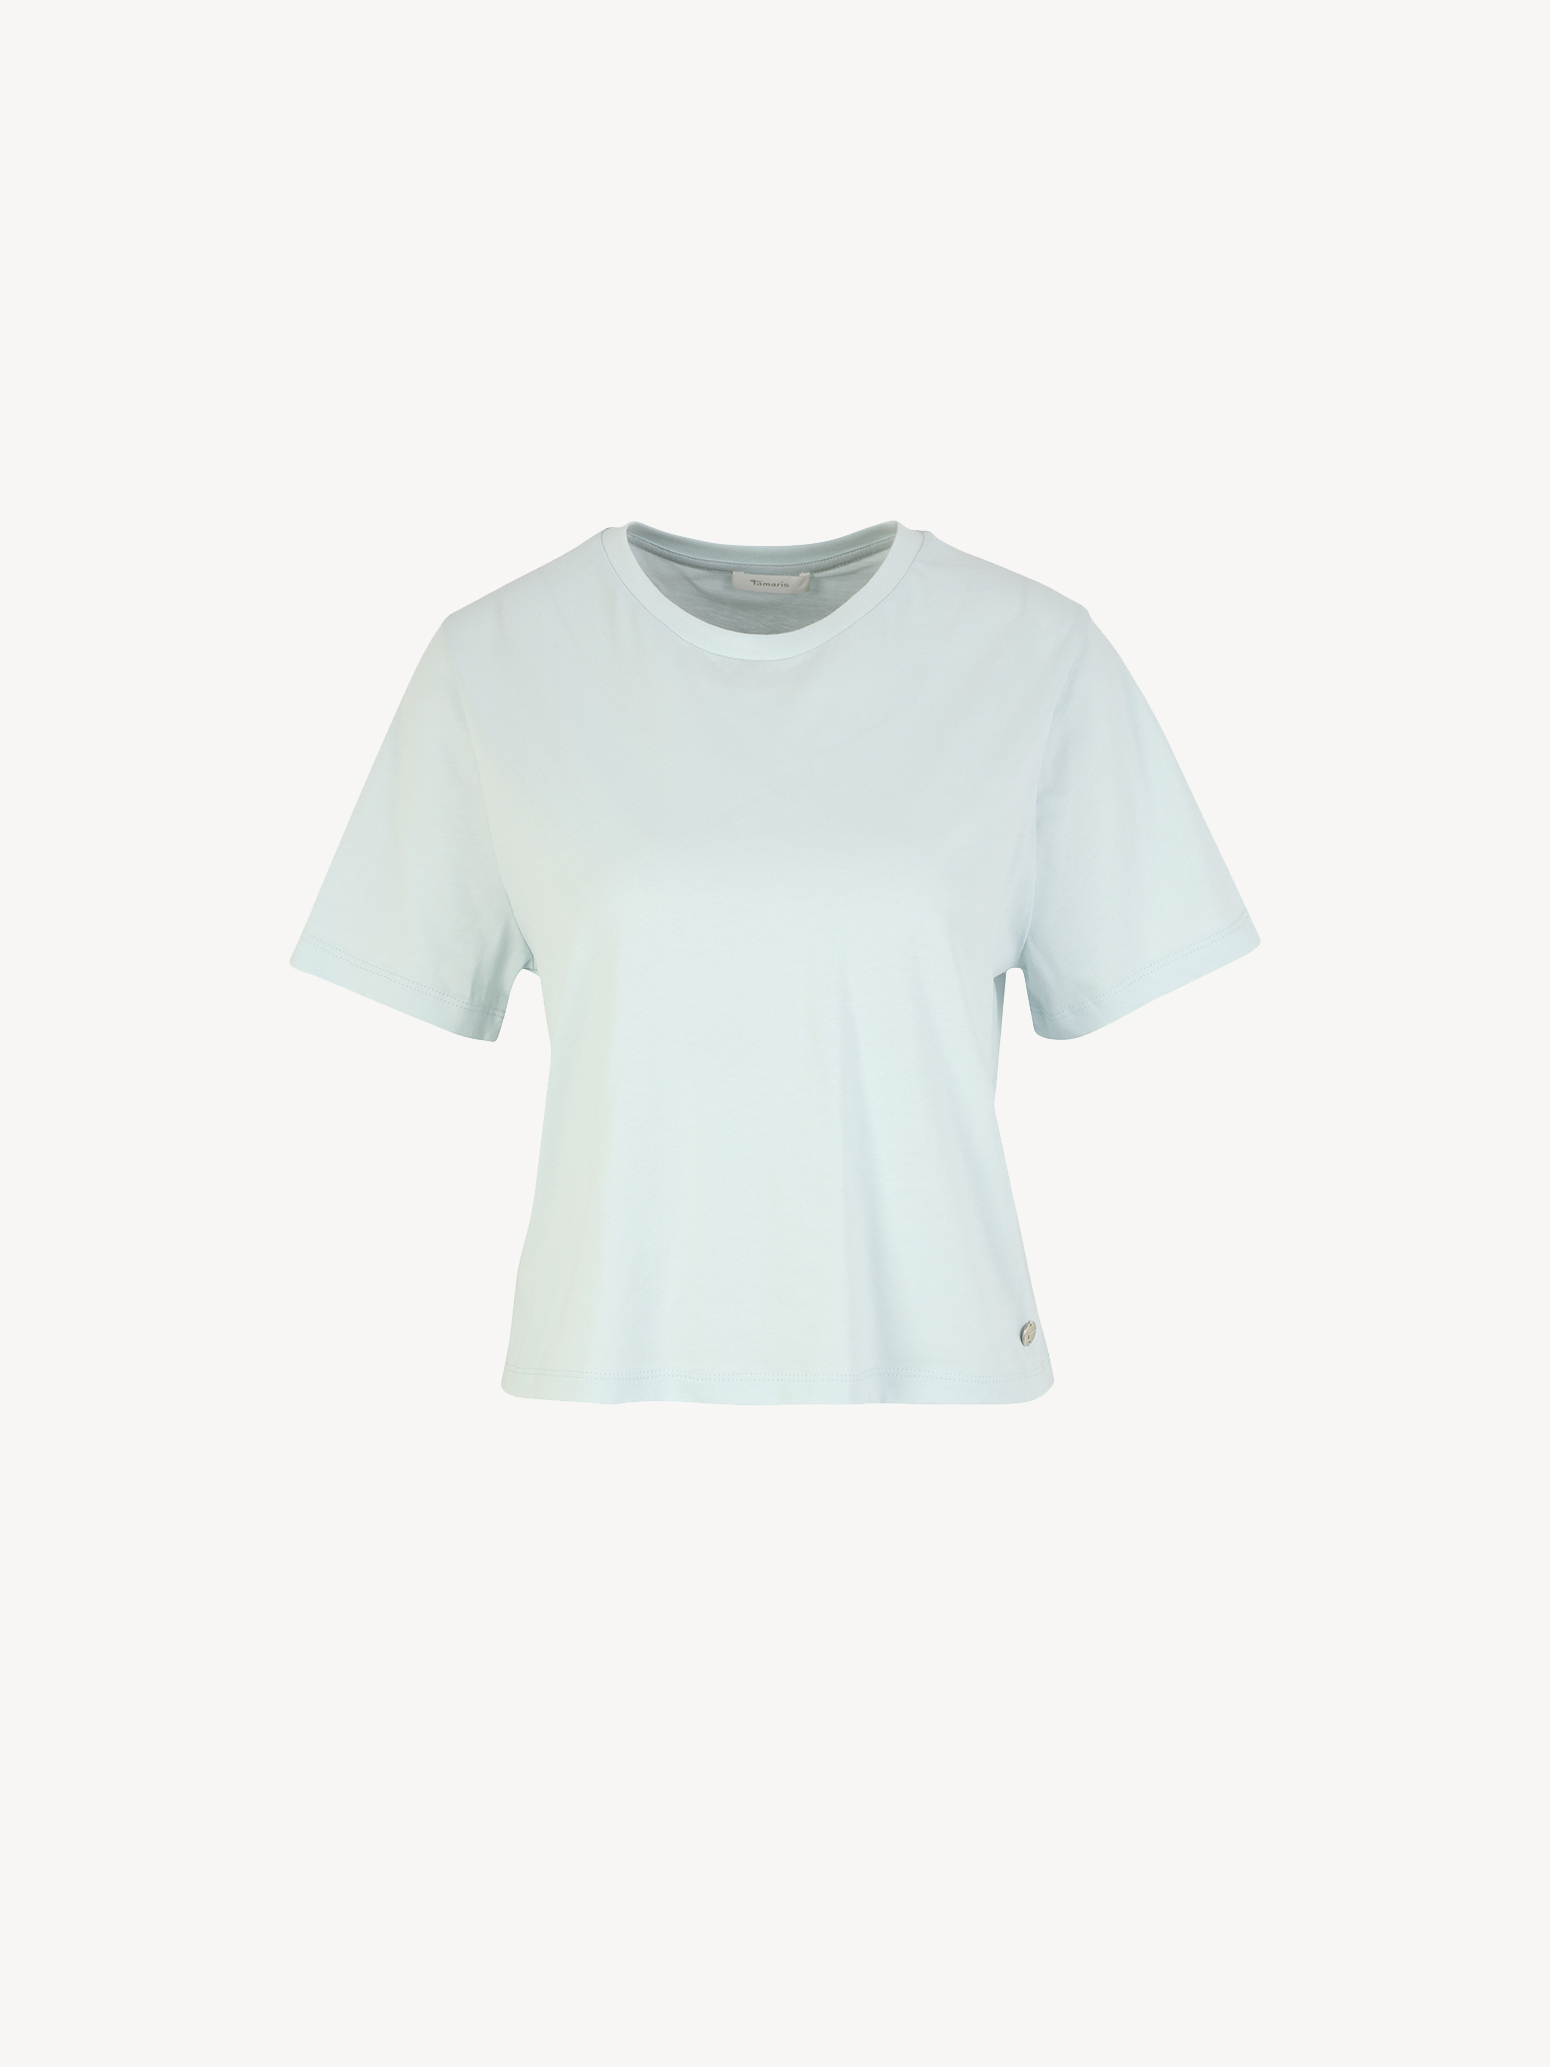 Buy Tamaris Shirts & Tops online now! | V-Shirts